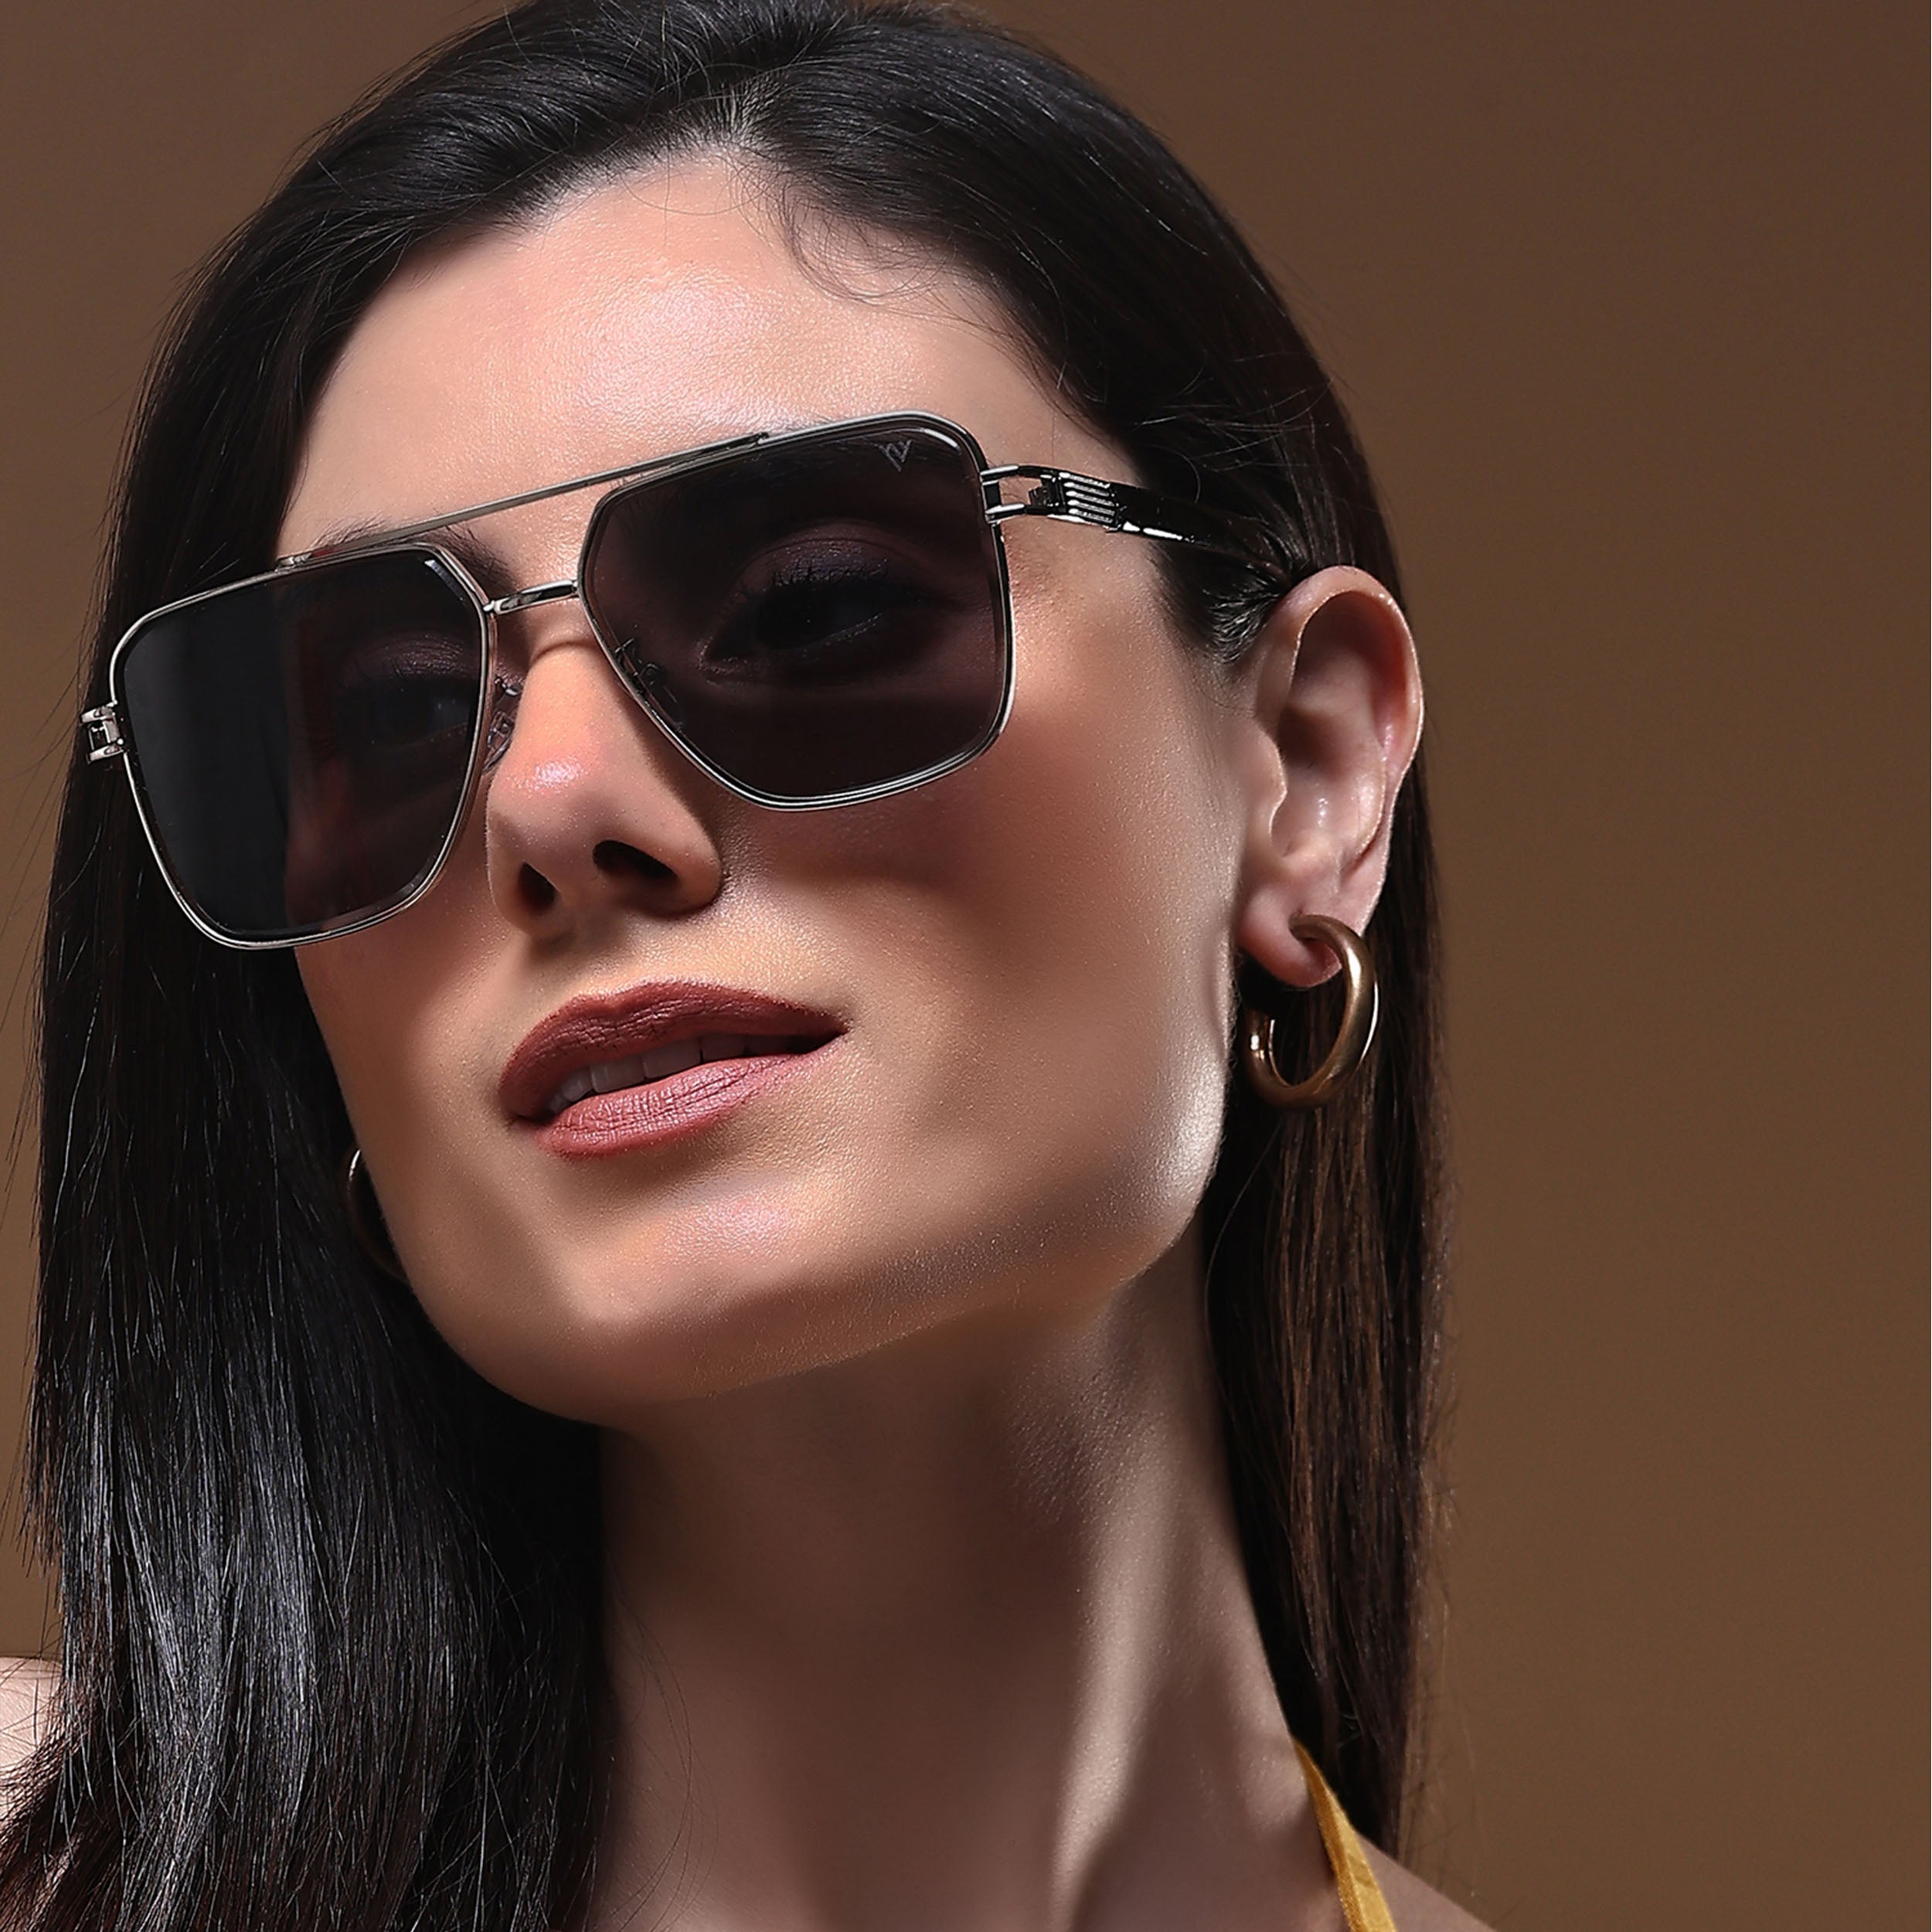 Voyage Wayfarer Sunglasses for Men & Women (Grey Lens | Silver Frame - MG5235)